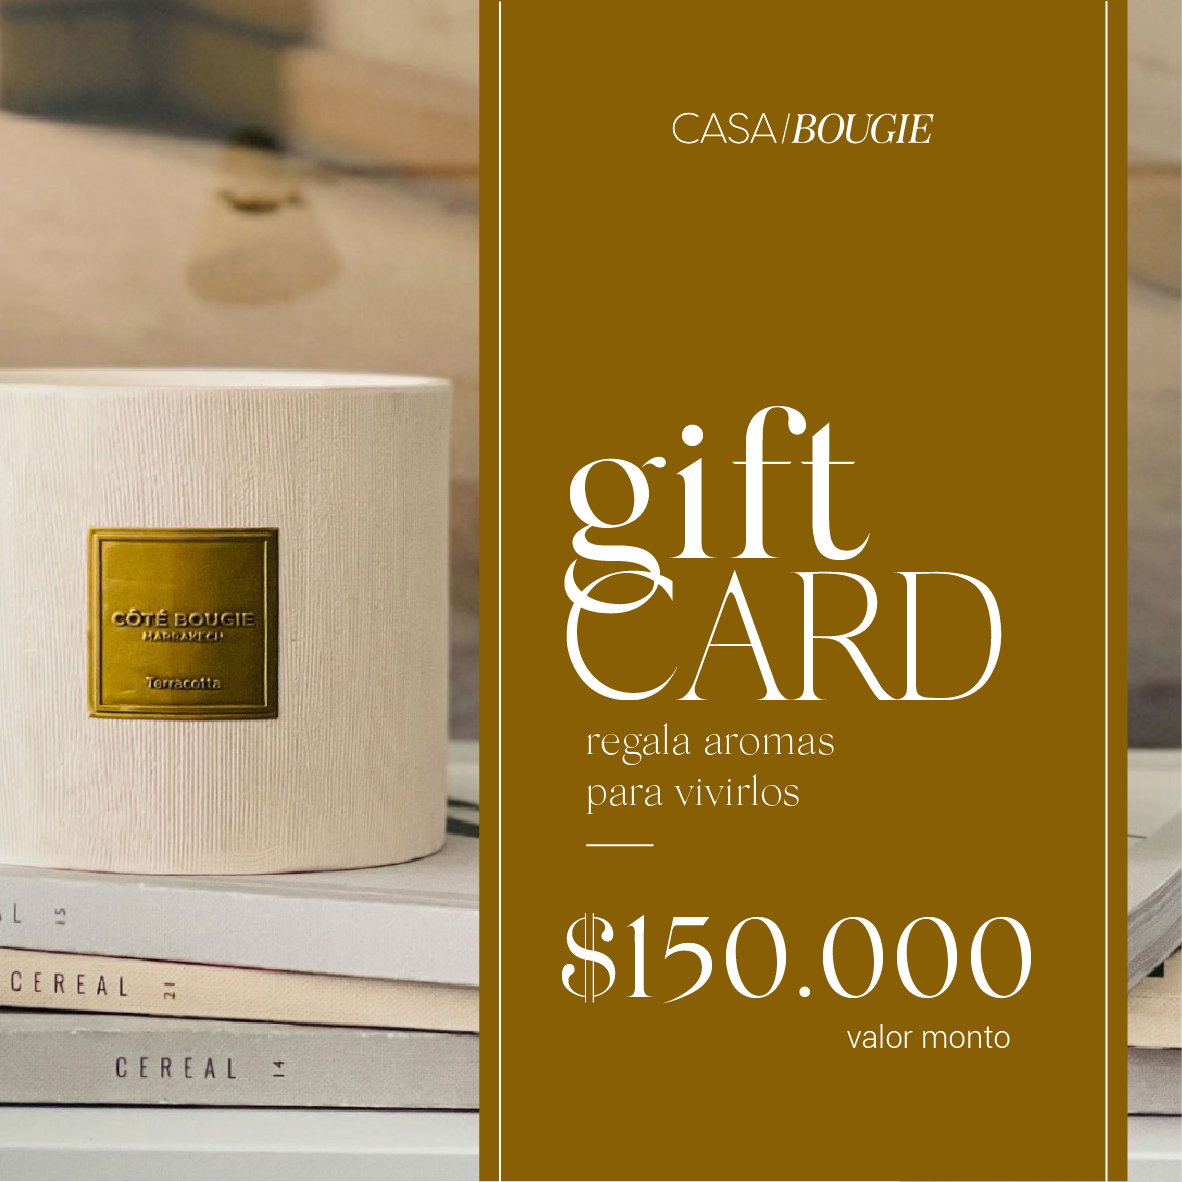 Gift Card CASA/BOUGIE